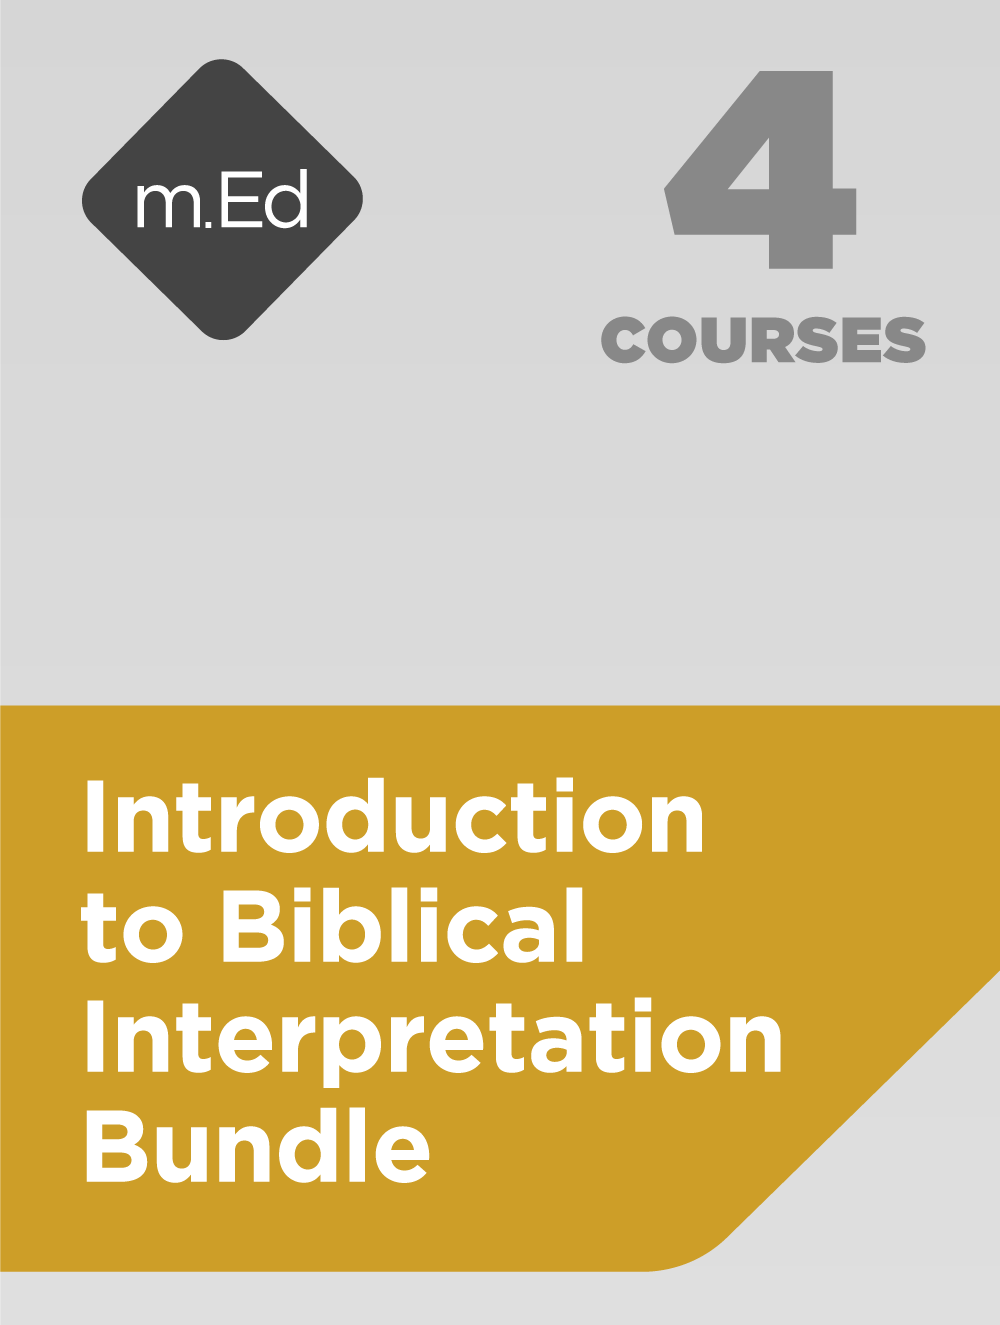 Introduction to Biblical Interpretation Bundle (4 courses)